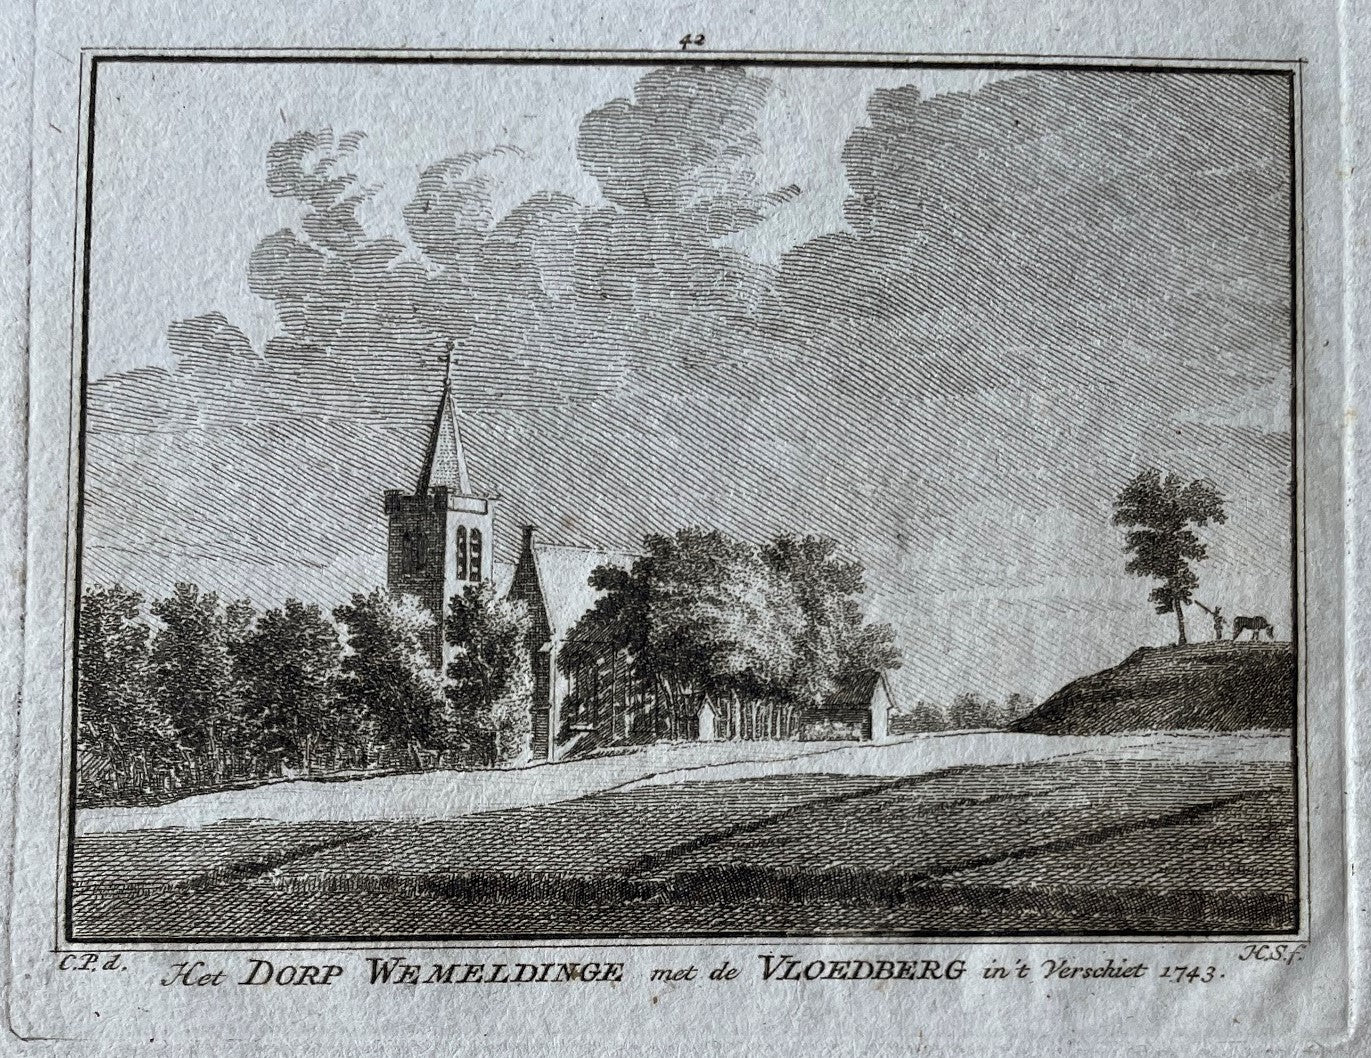 Wemeldinge - H Spilman - ca. 1750